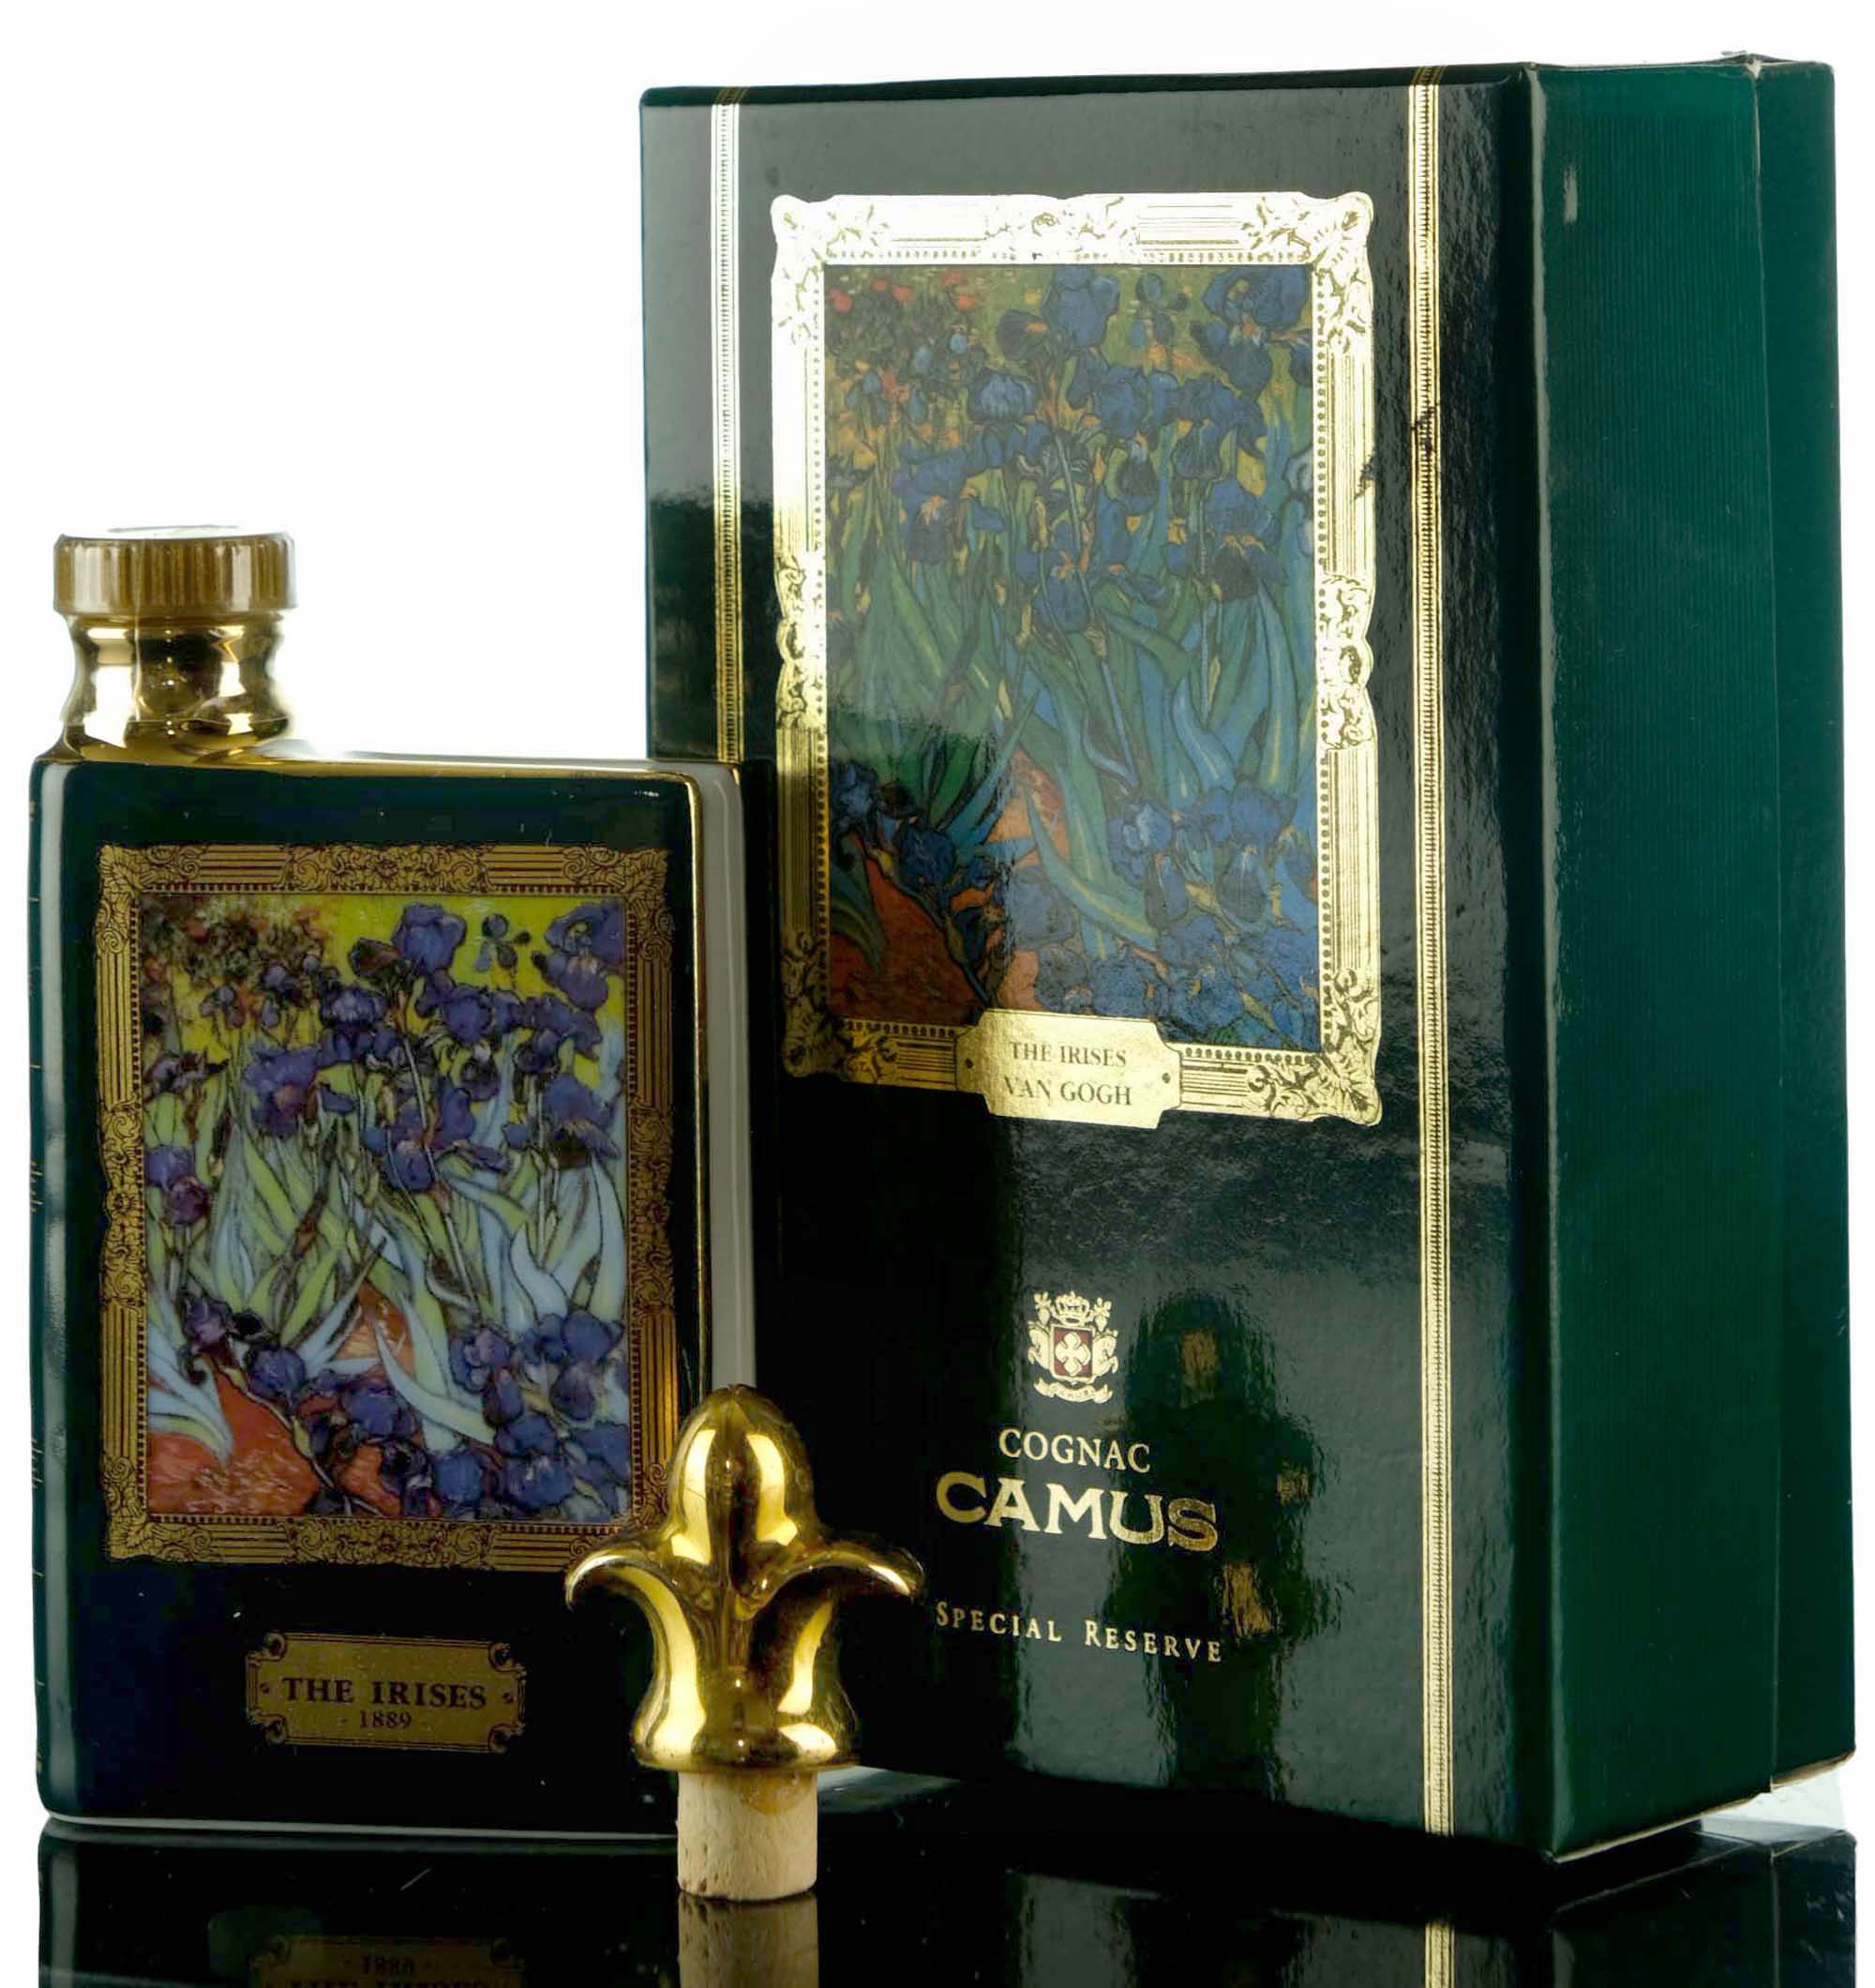 Camus Special Reserve Cognac - Grand Masters Collection - The Irises Van Gogh